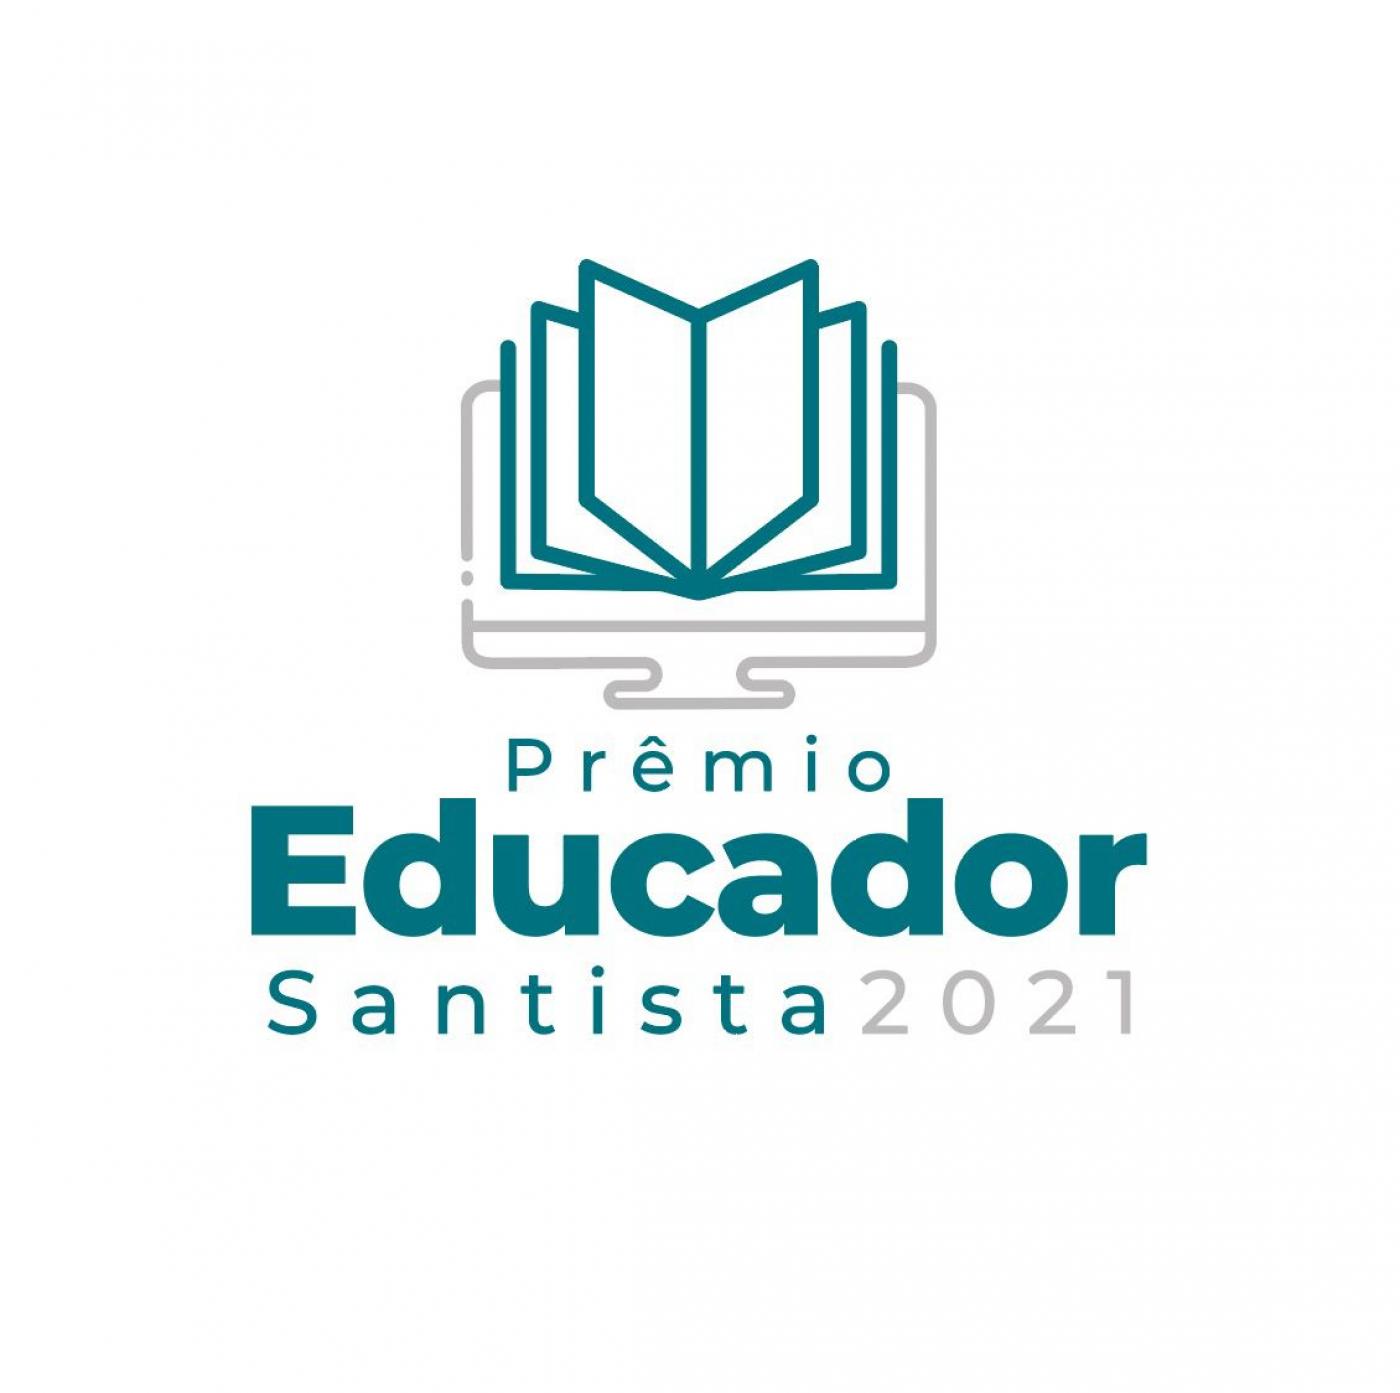 logotipo do prêmio com desenho de livro aberto. Abaixo se lê Prêmio Educador Santista 2021